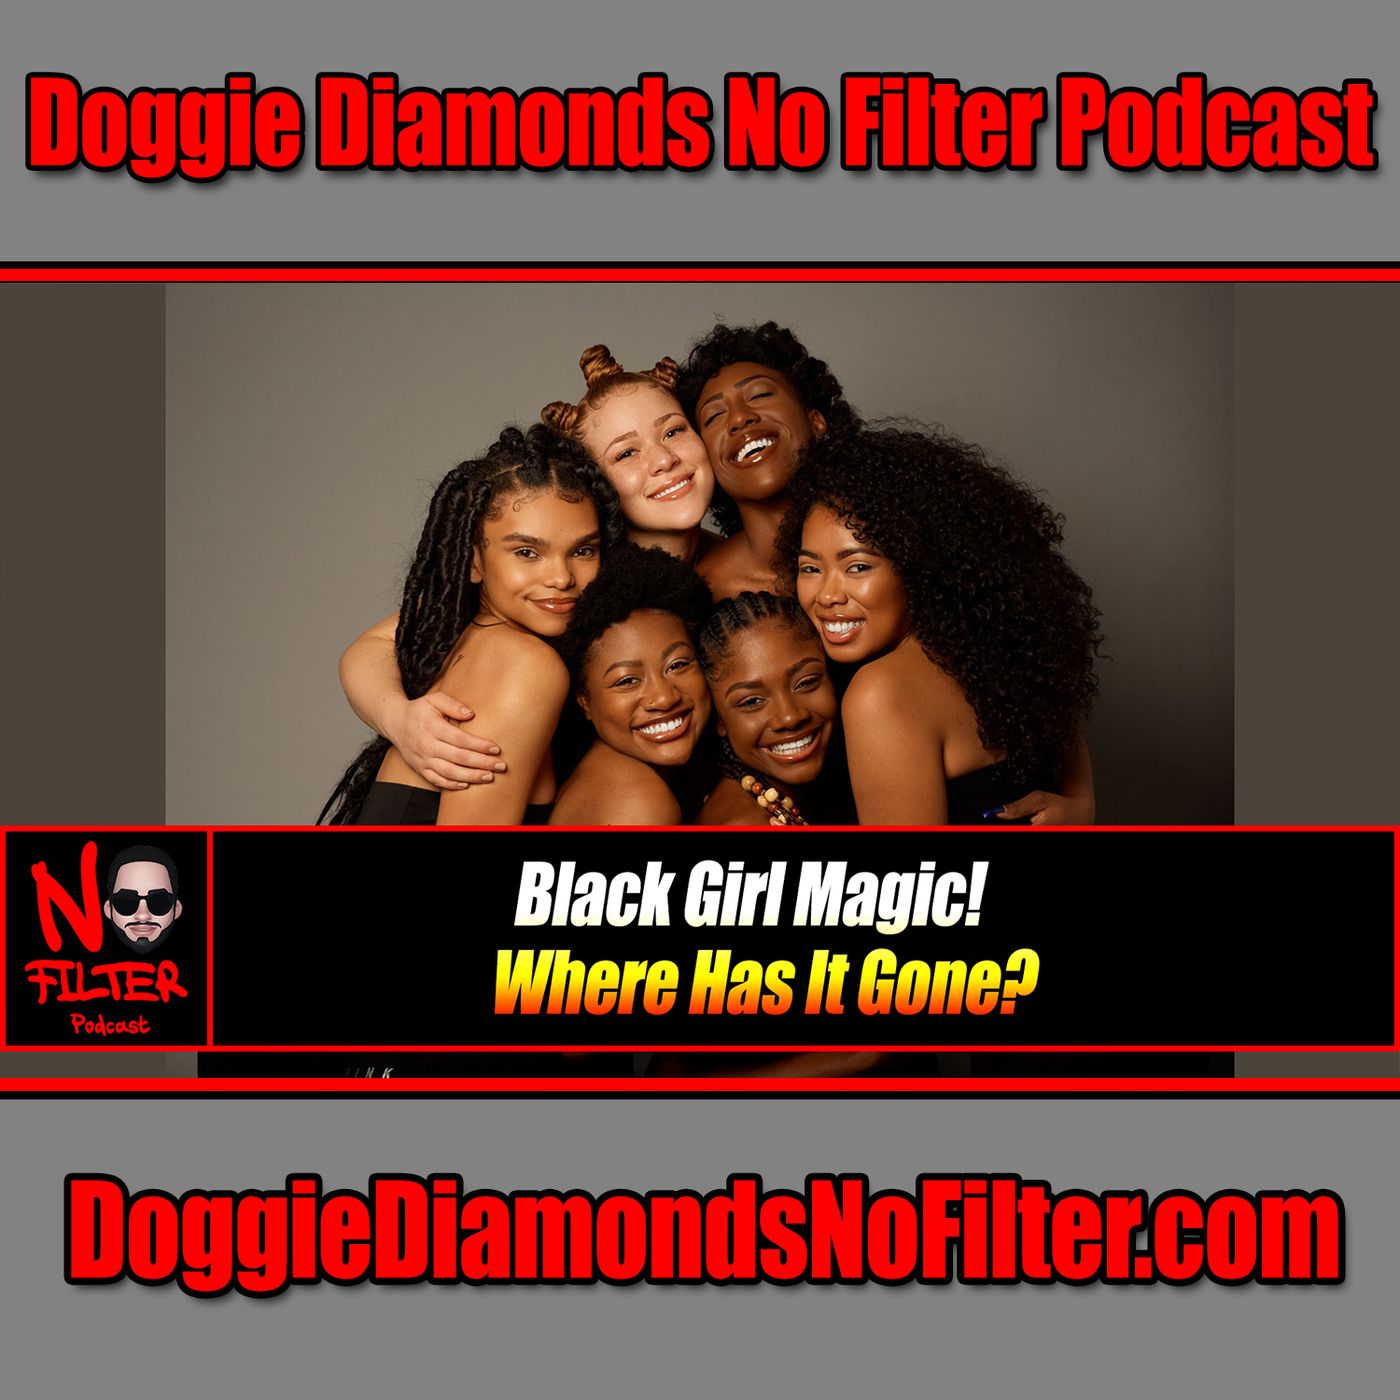 Black Girl Magic! Where Has It Gone?